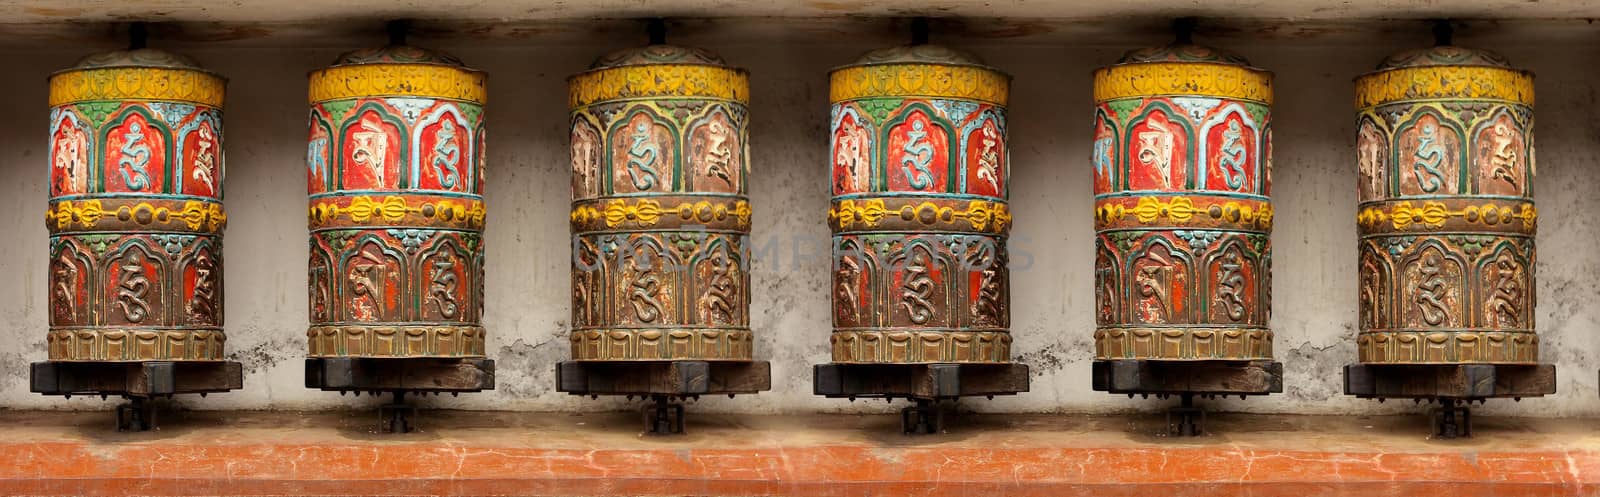 Pattern - Buddhist Meditation prayer wheel in Kathmandu, Swoyamb by cococinema